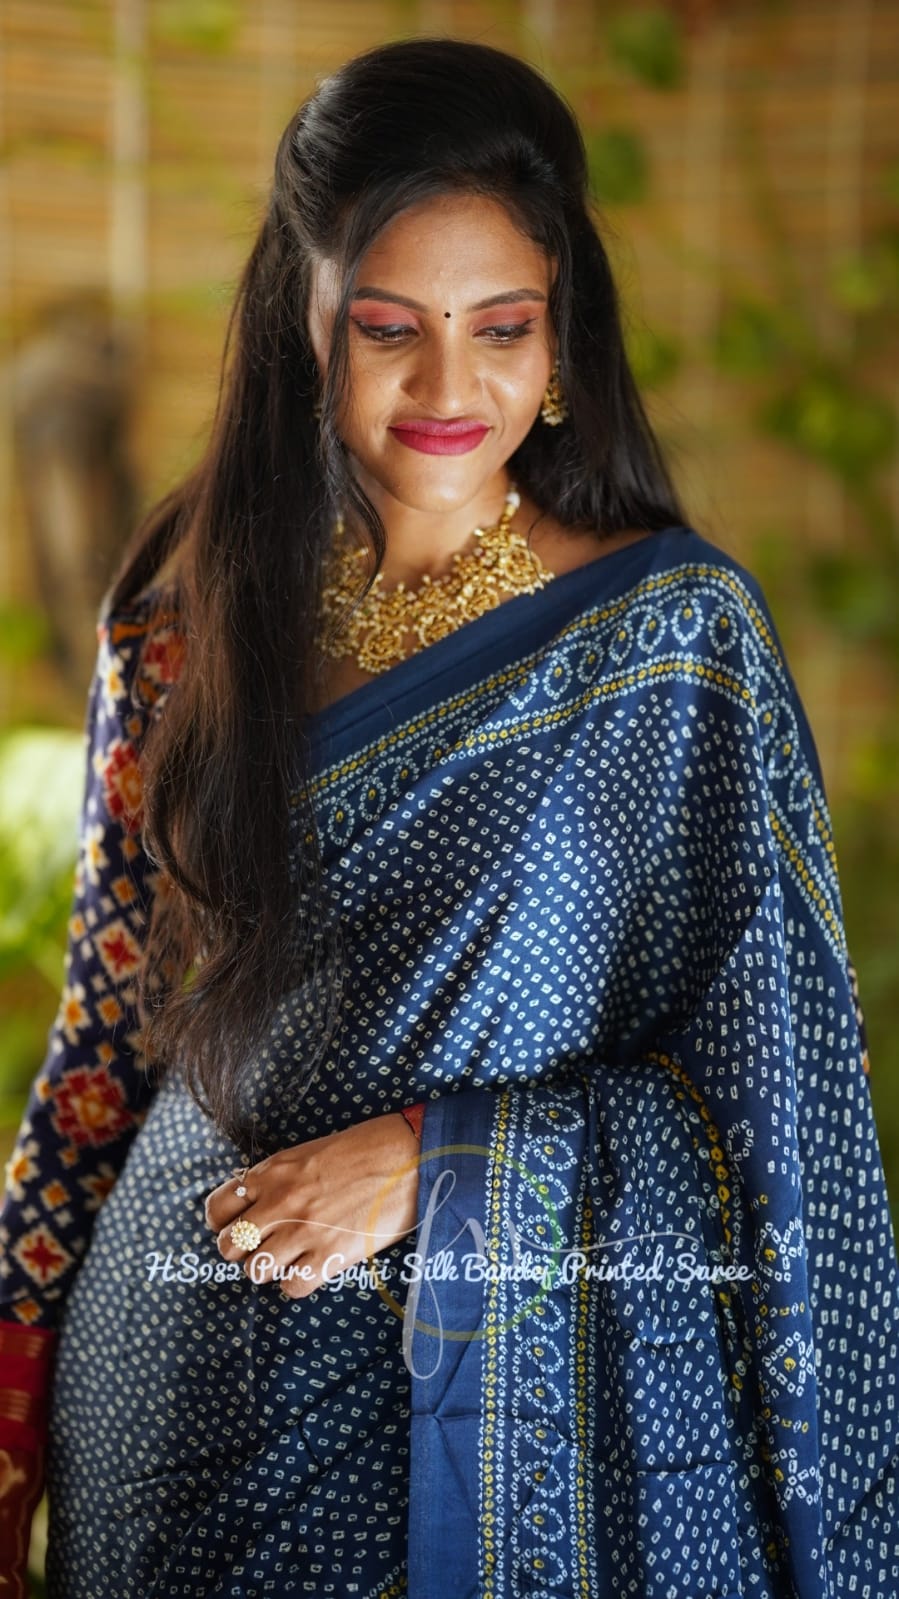 Anisha printed bandhej gajji silk saree